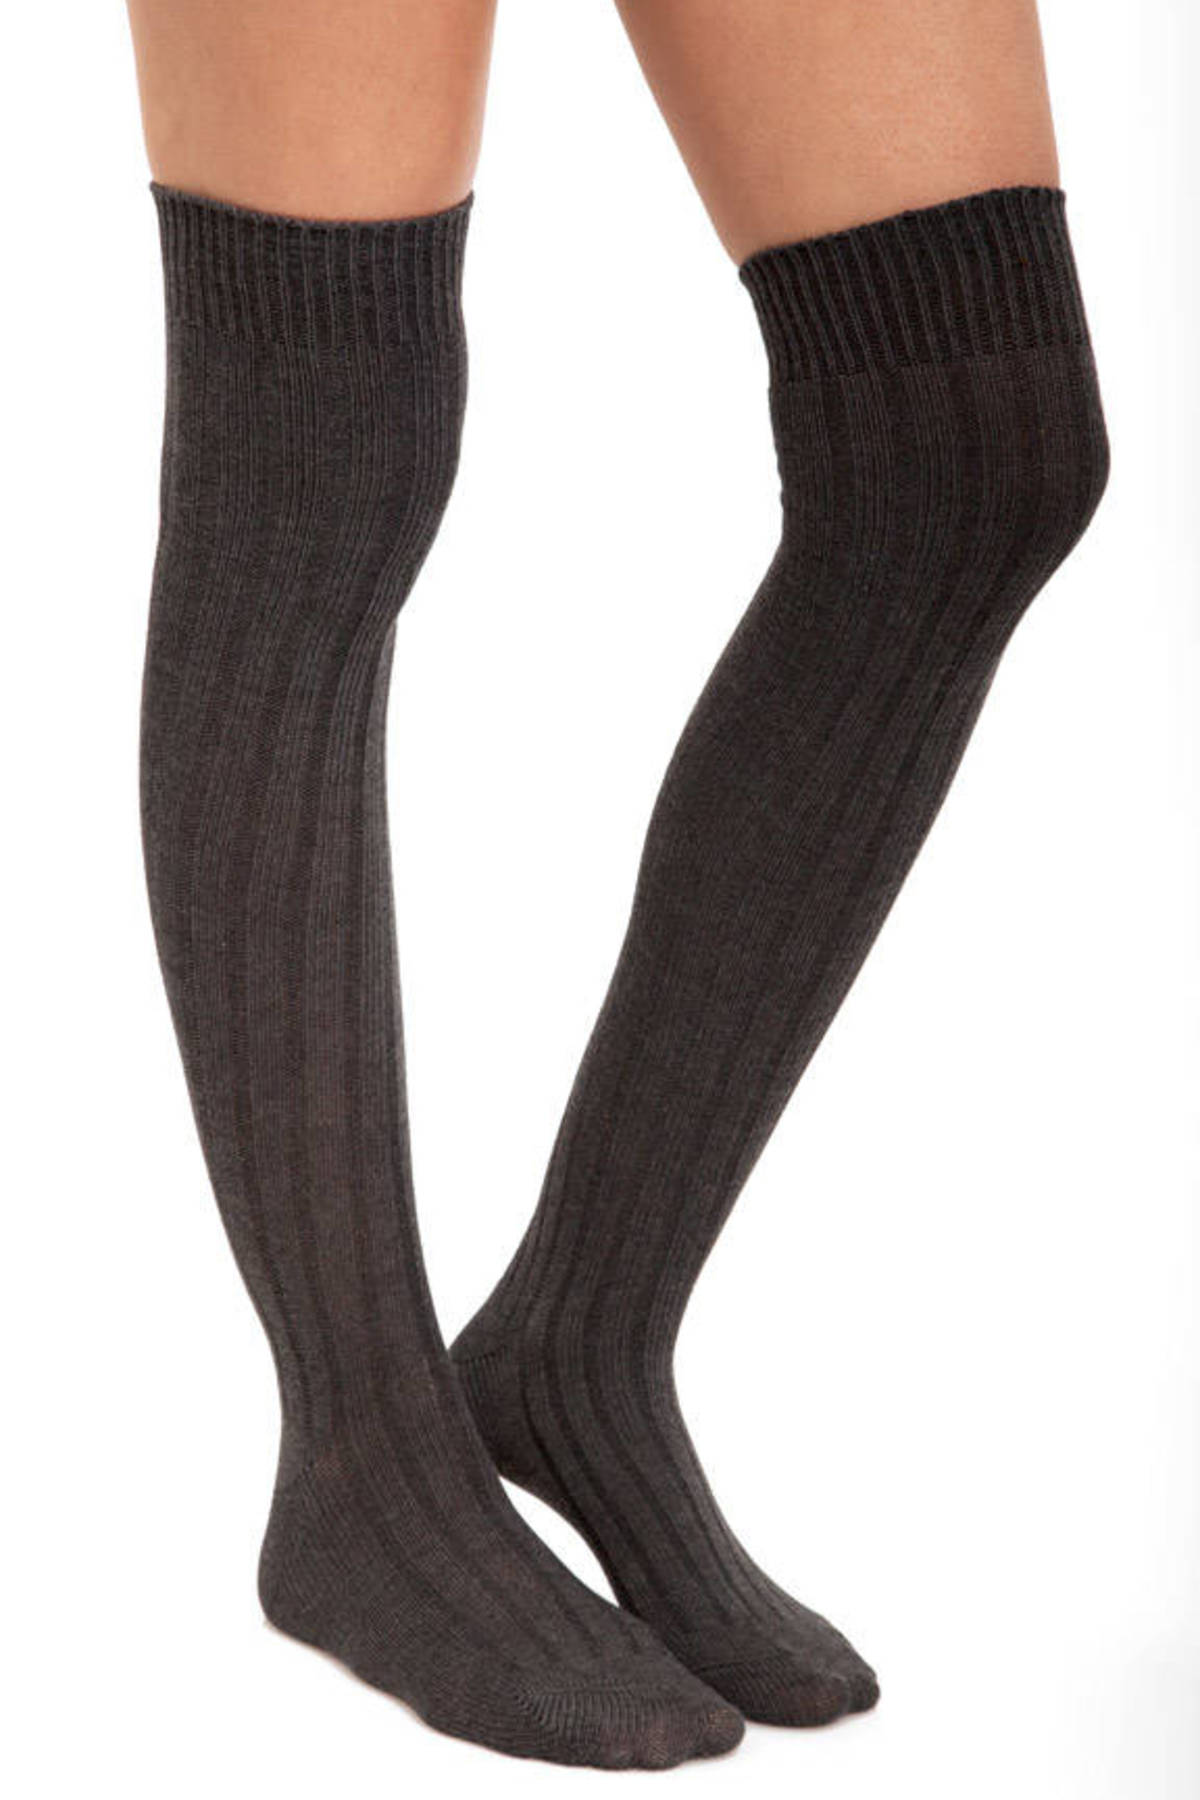 Overcast Thigh High Socks in Charcoal - $16 | Tobi US